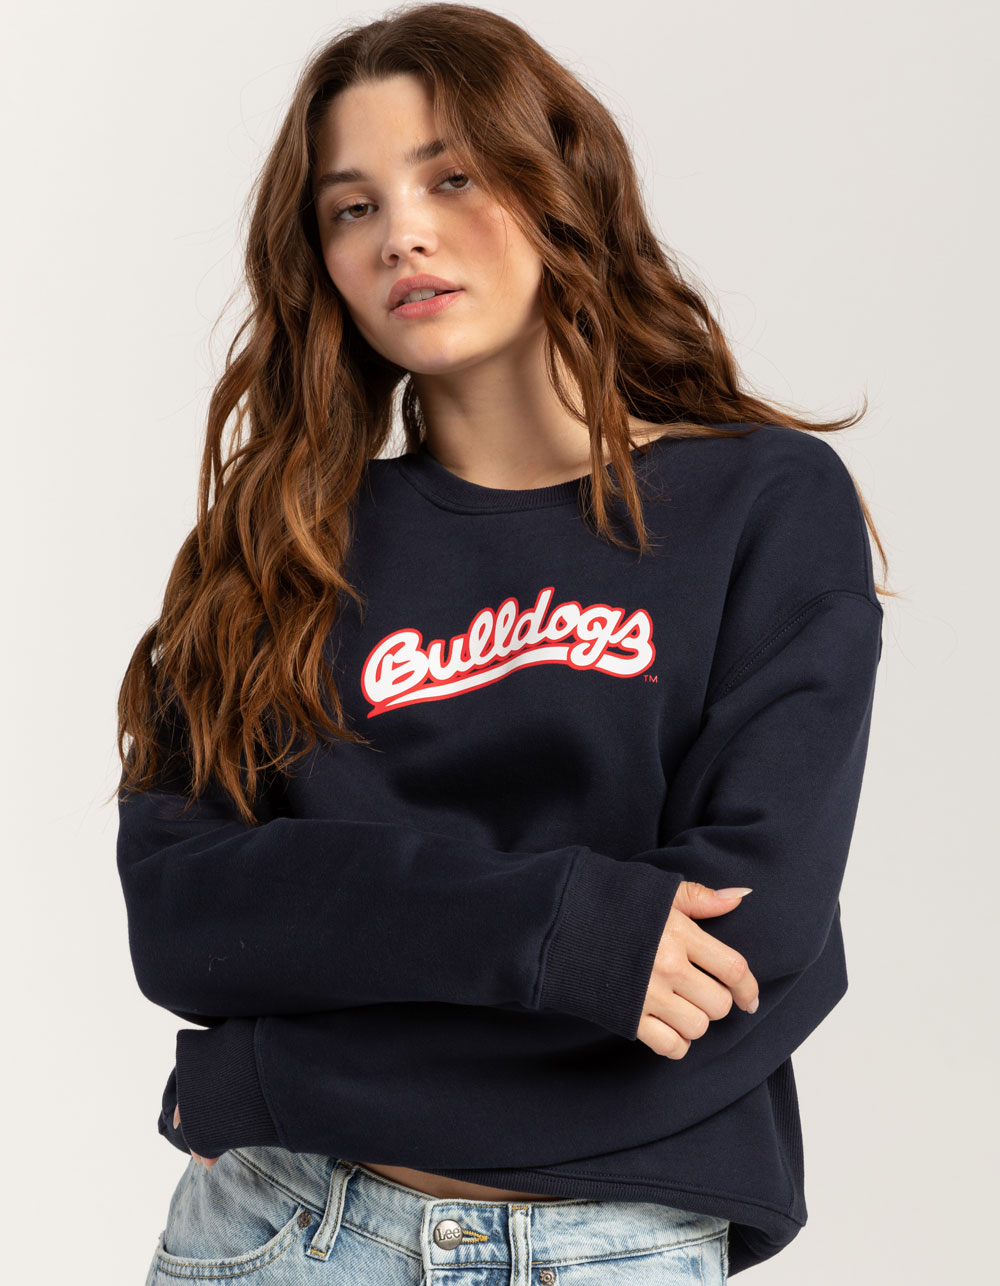 Women's Graphic Sweatshirts & Hoodies